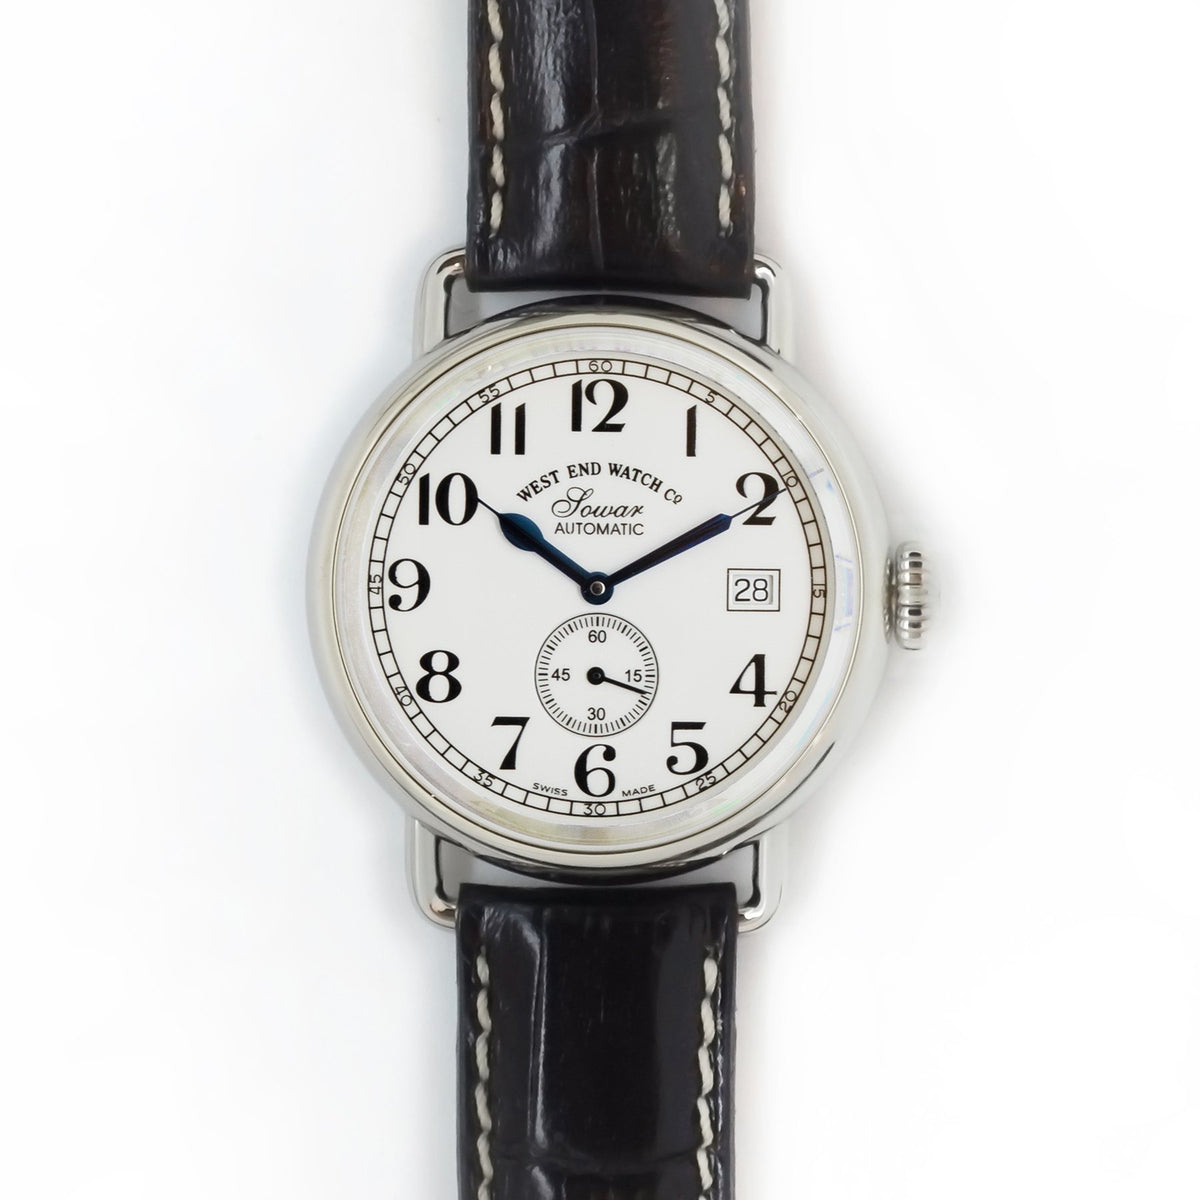 West End Watch Co. - Sowar 1916 - White Dial, Silver Case